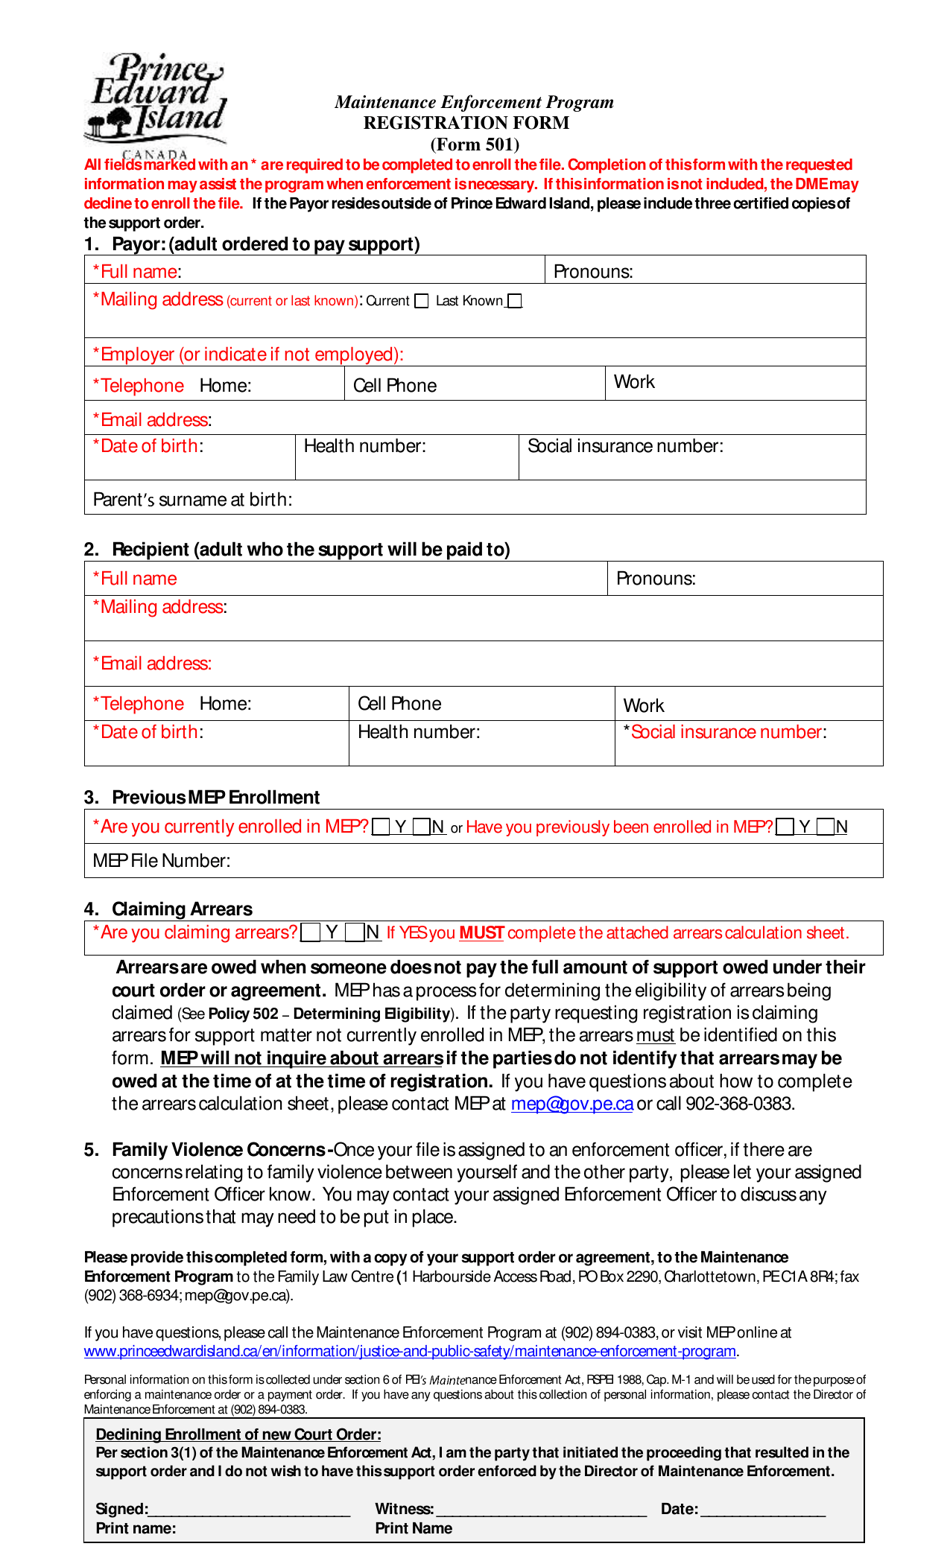 Form 501 Maintenance Enforcement Program - Registration - Prince Edward Island, Canada, Page 1